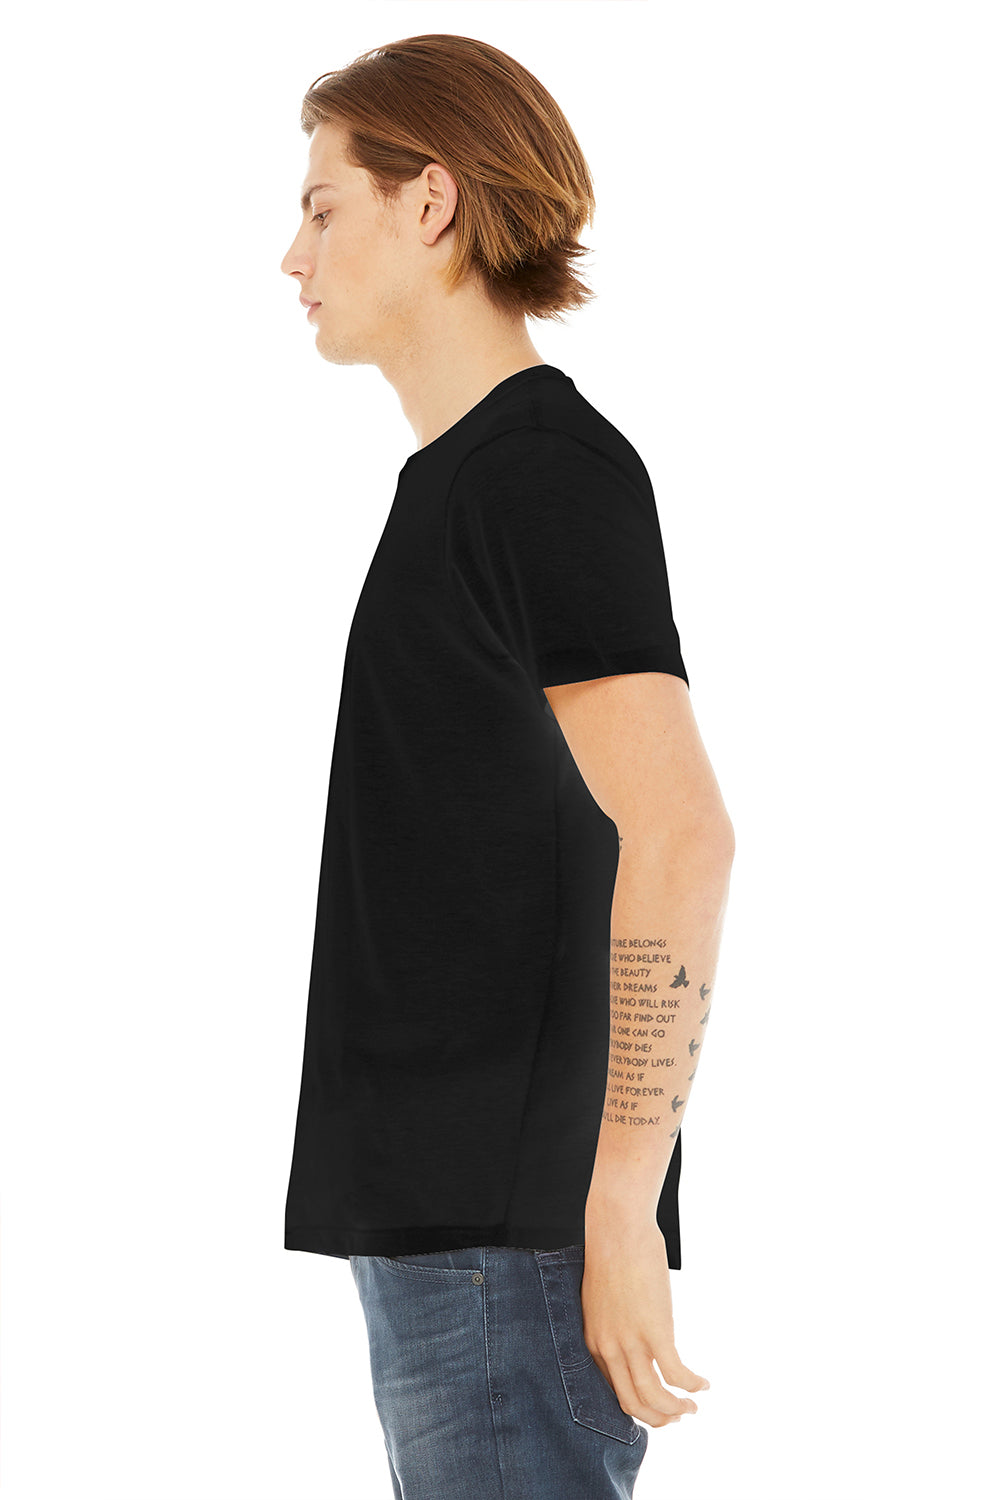 Bella + Canvas BC3650/3650 Mens Short Sleeve Crewneck T-Shirt Black Model Side